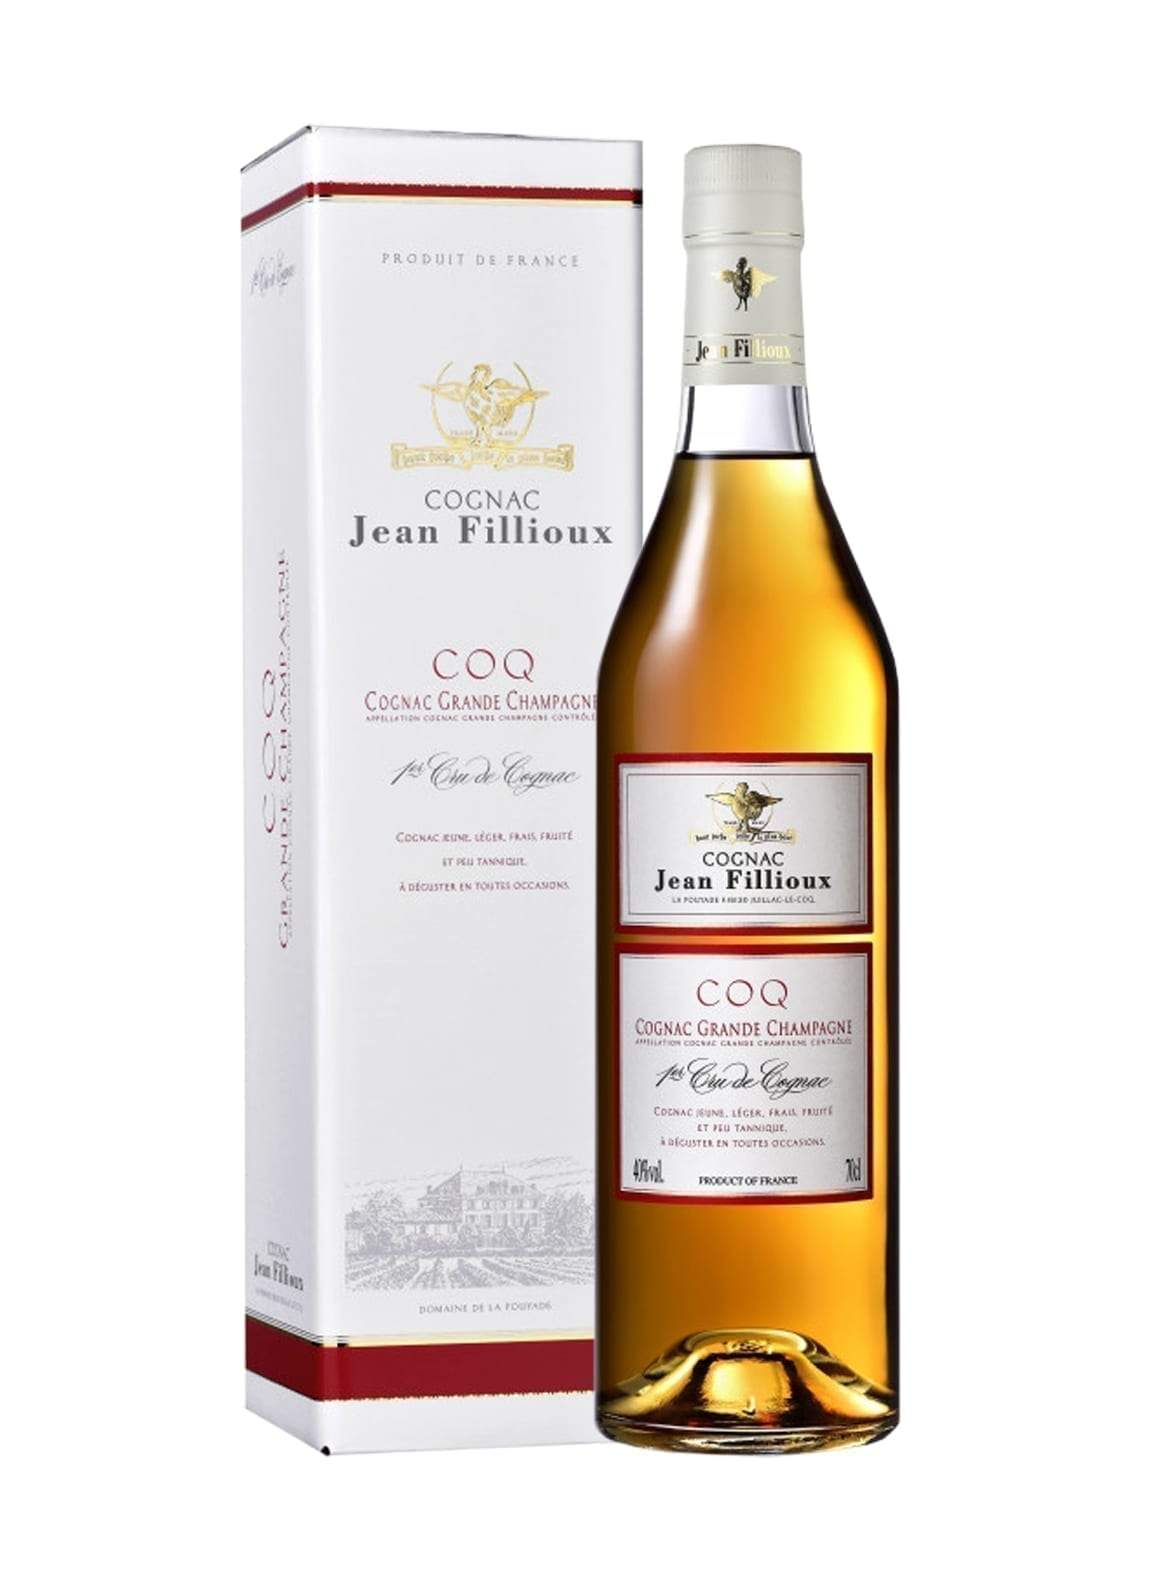 Jean Fillioux Cognac 'COQ' Grande Champagne 1er Cru 3-4 years 40% 700ml | Brandy | Shop online at Spirits of France